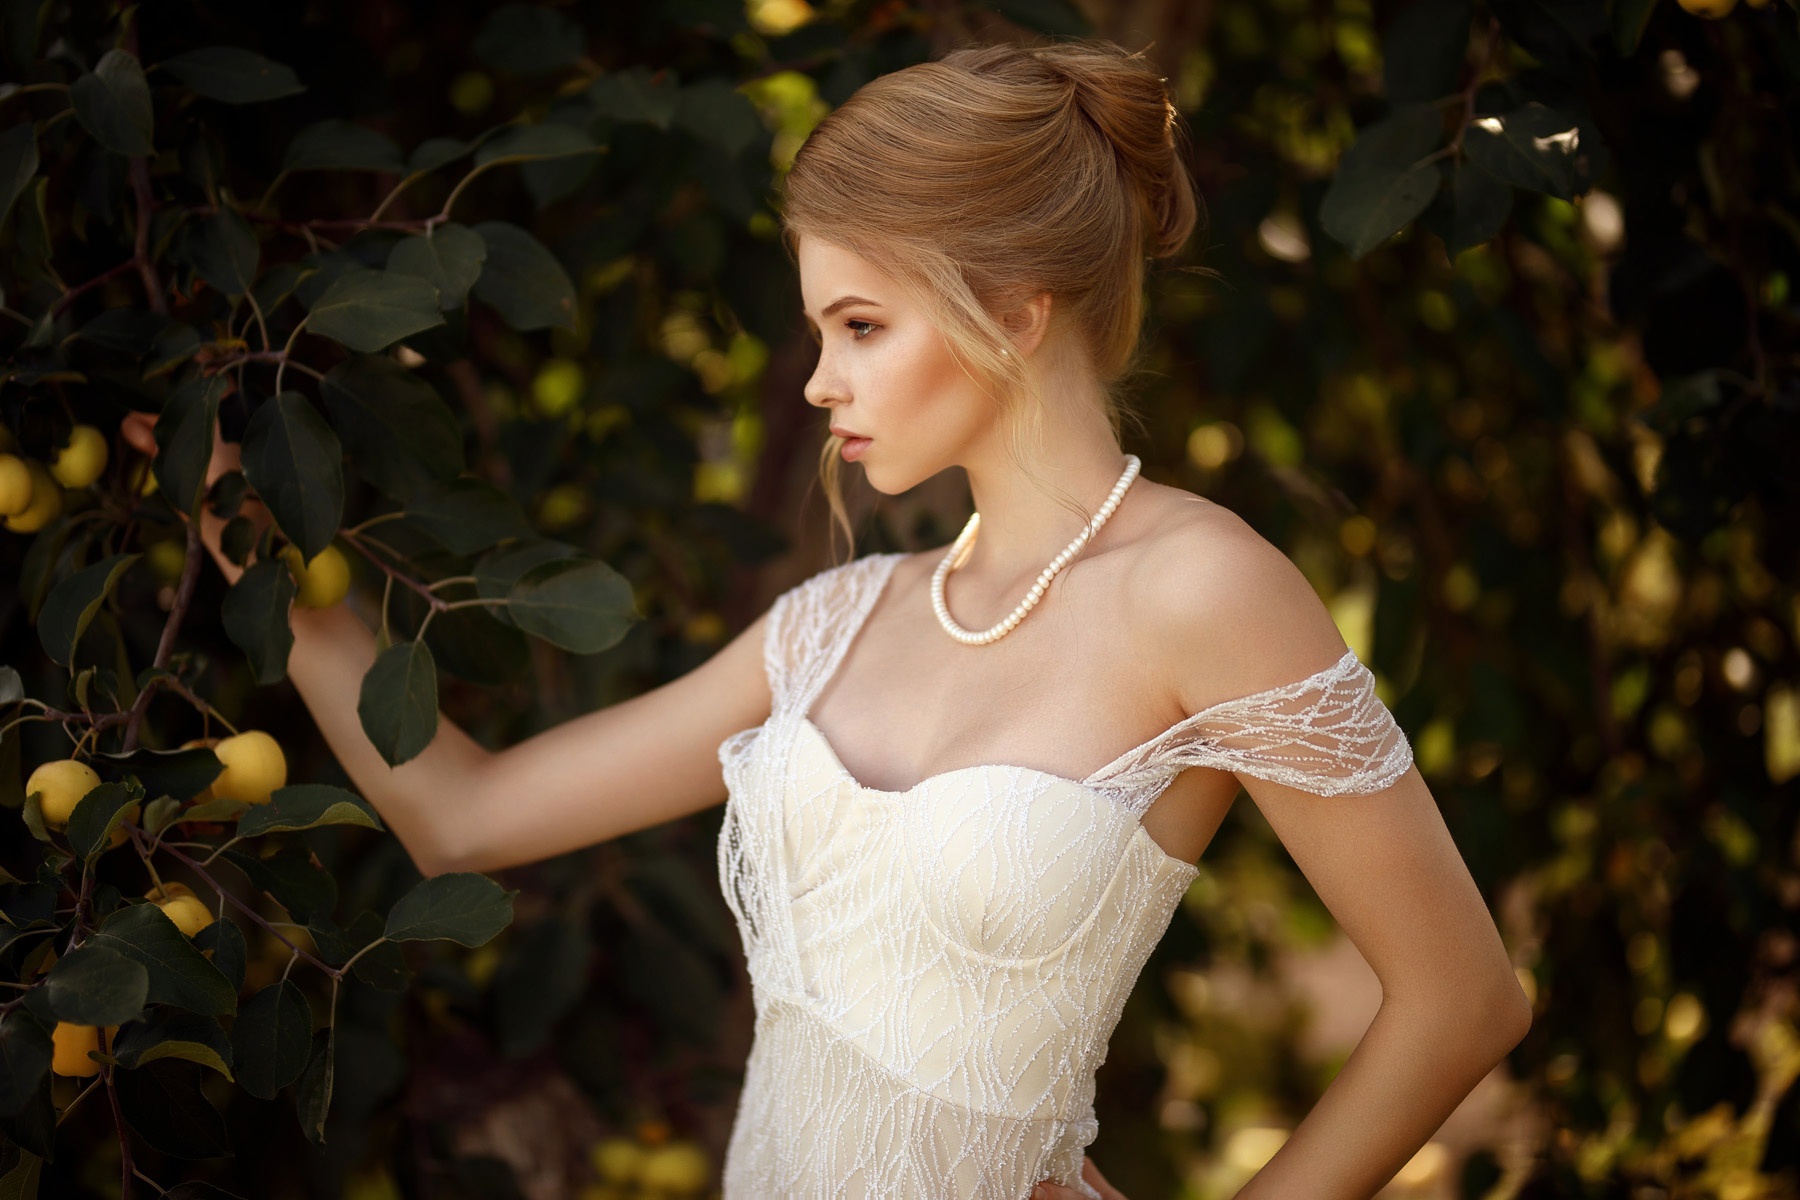 Ivan Vedernikov Women Blonde Necklace White Clothing Fruit Bridal Gown 1800x1200